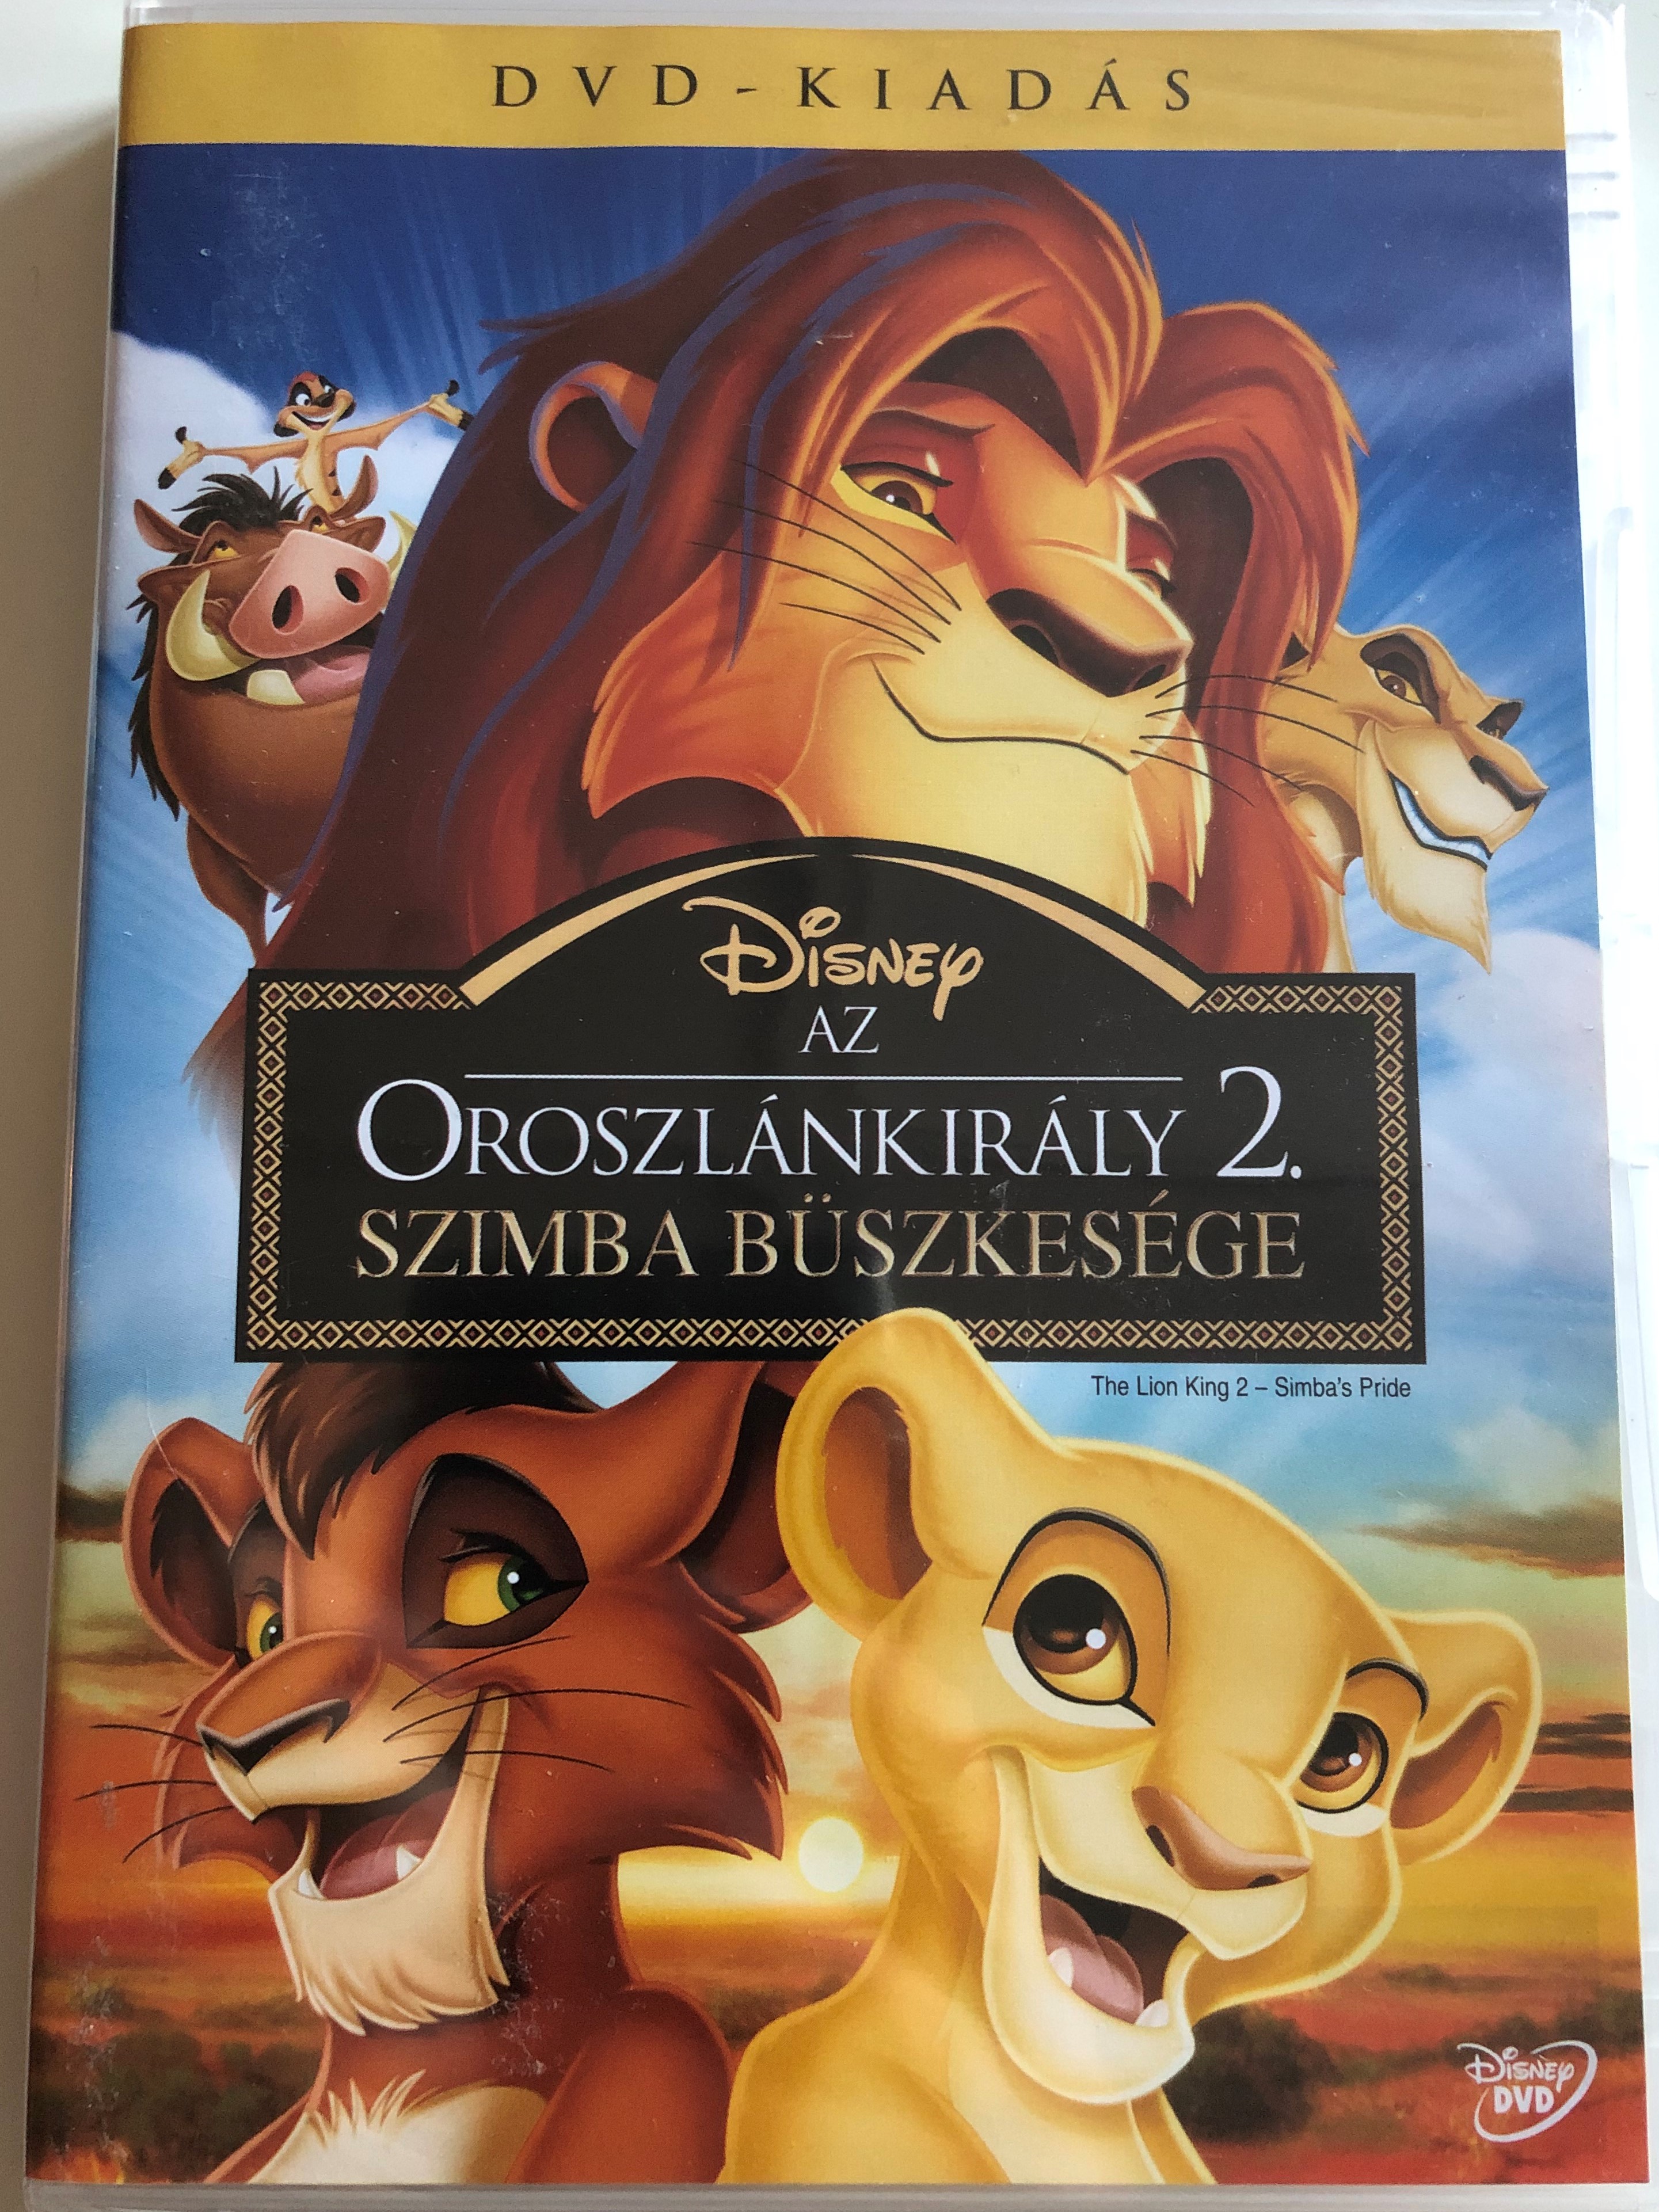 the-lion-king-2-simba-s-pride-dvd-oroszl-nkir-ly-2.-szimba-b-szkes-ge-1.jpg